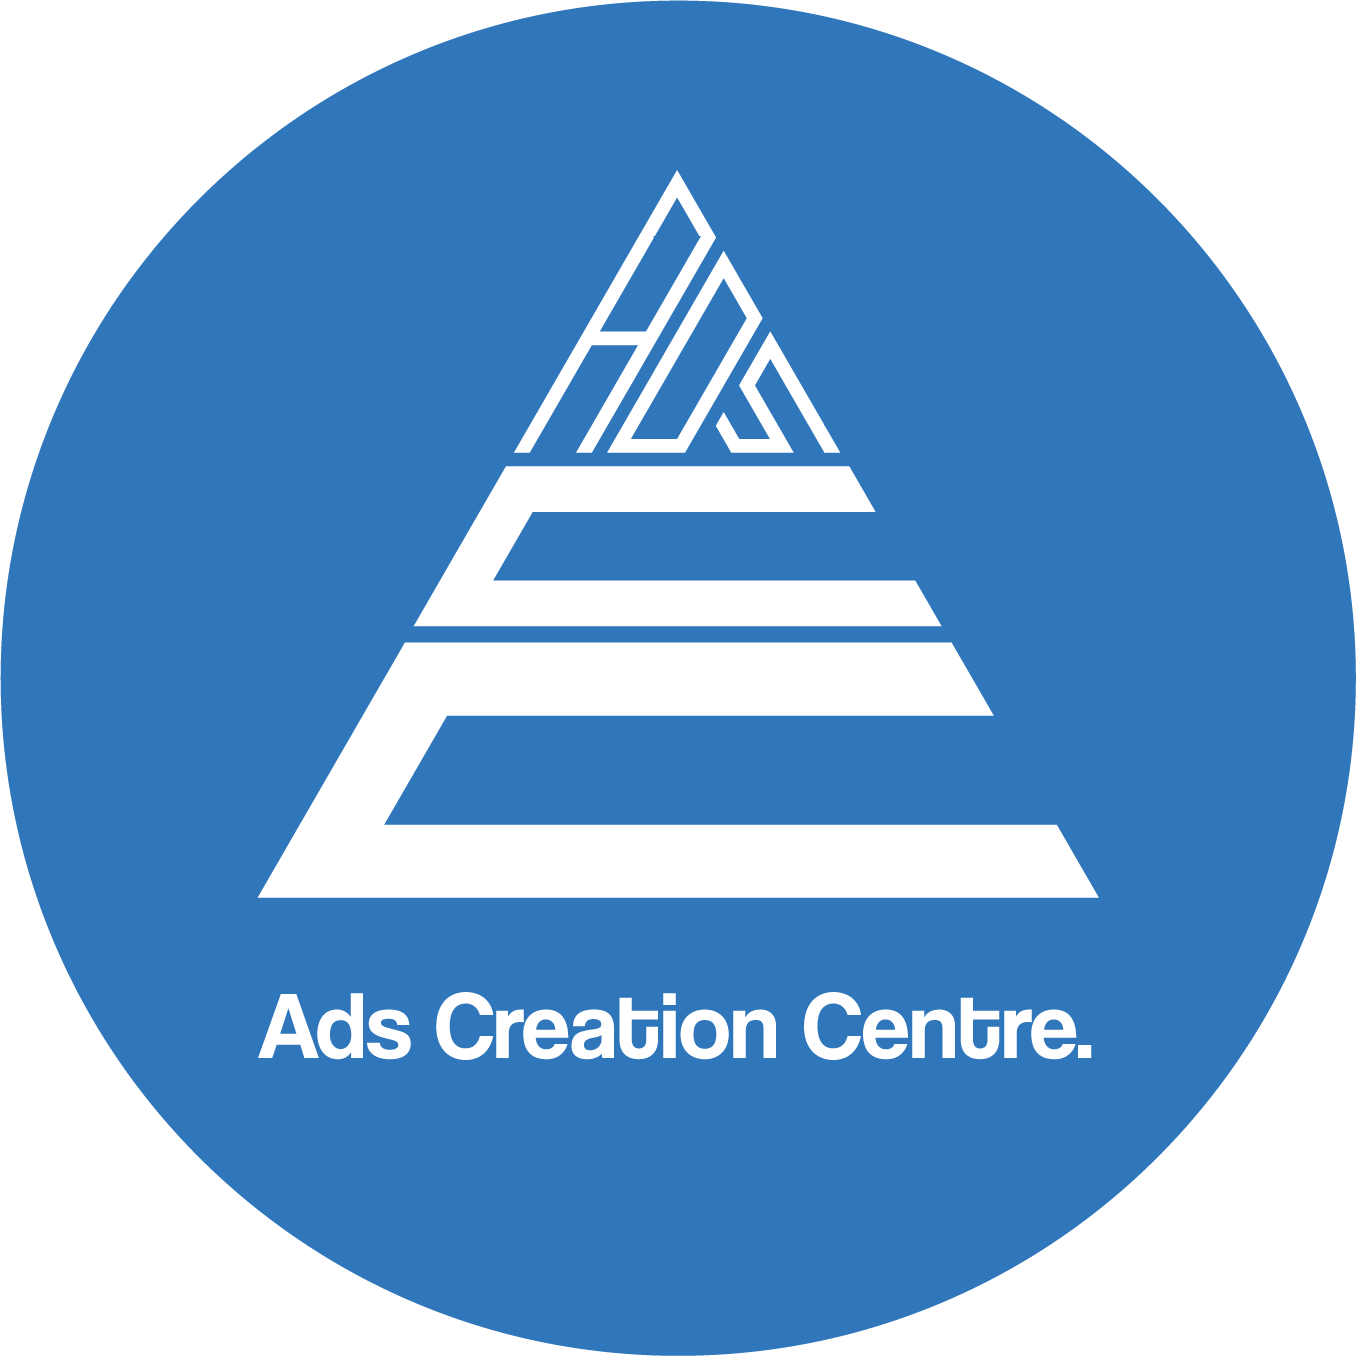 Ads Creation Centre